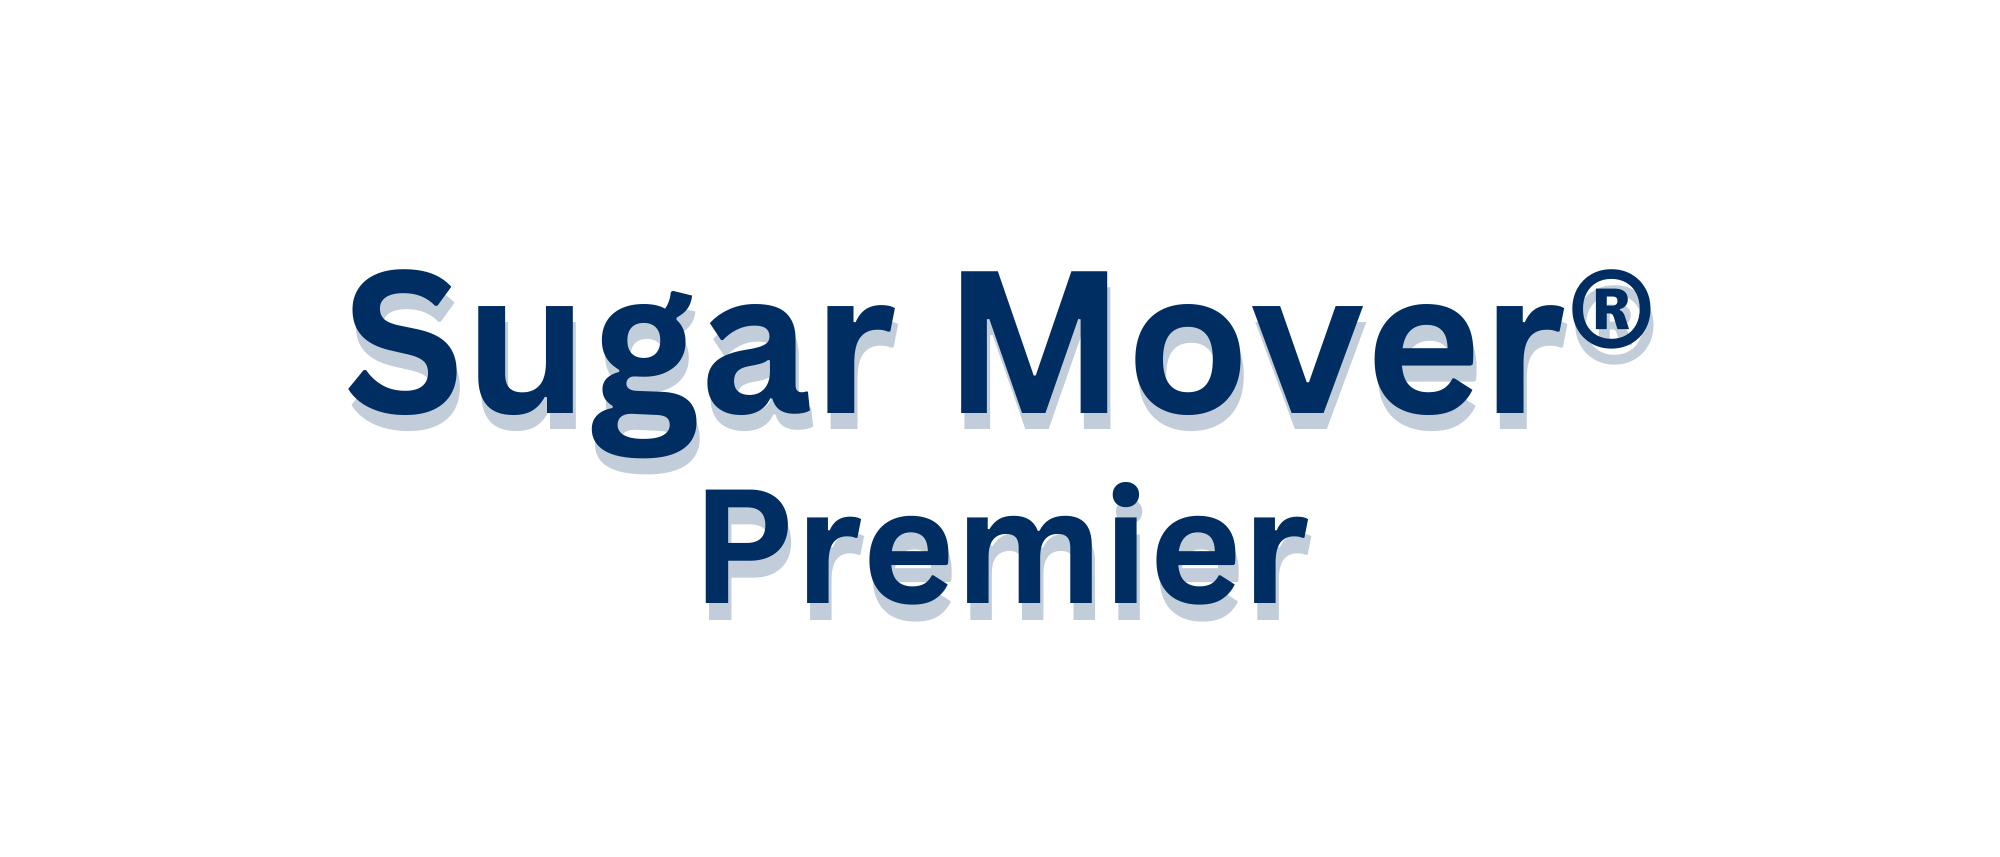 Sugar Mover Premier - Blue